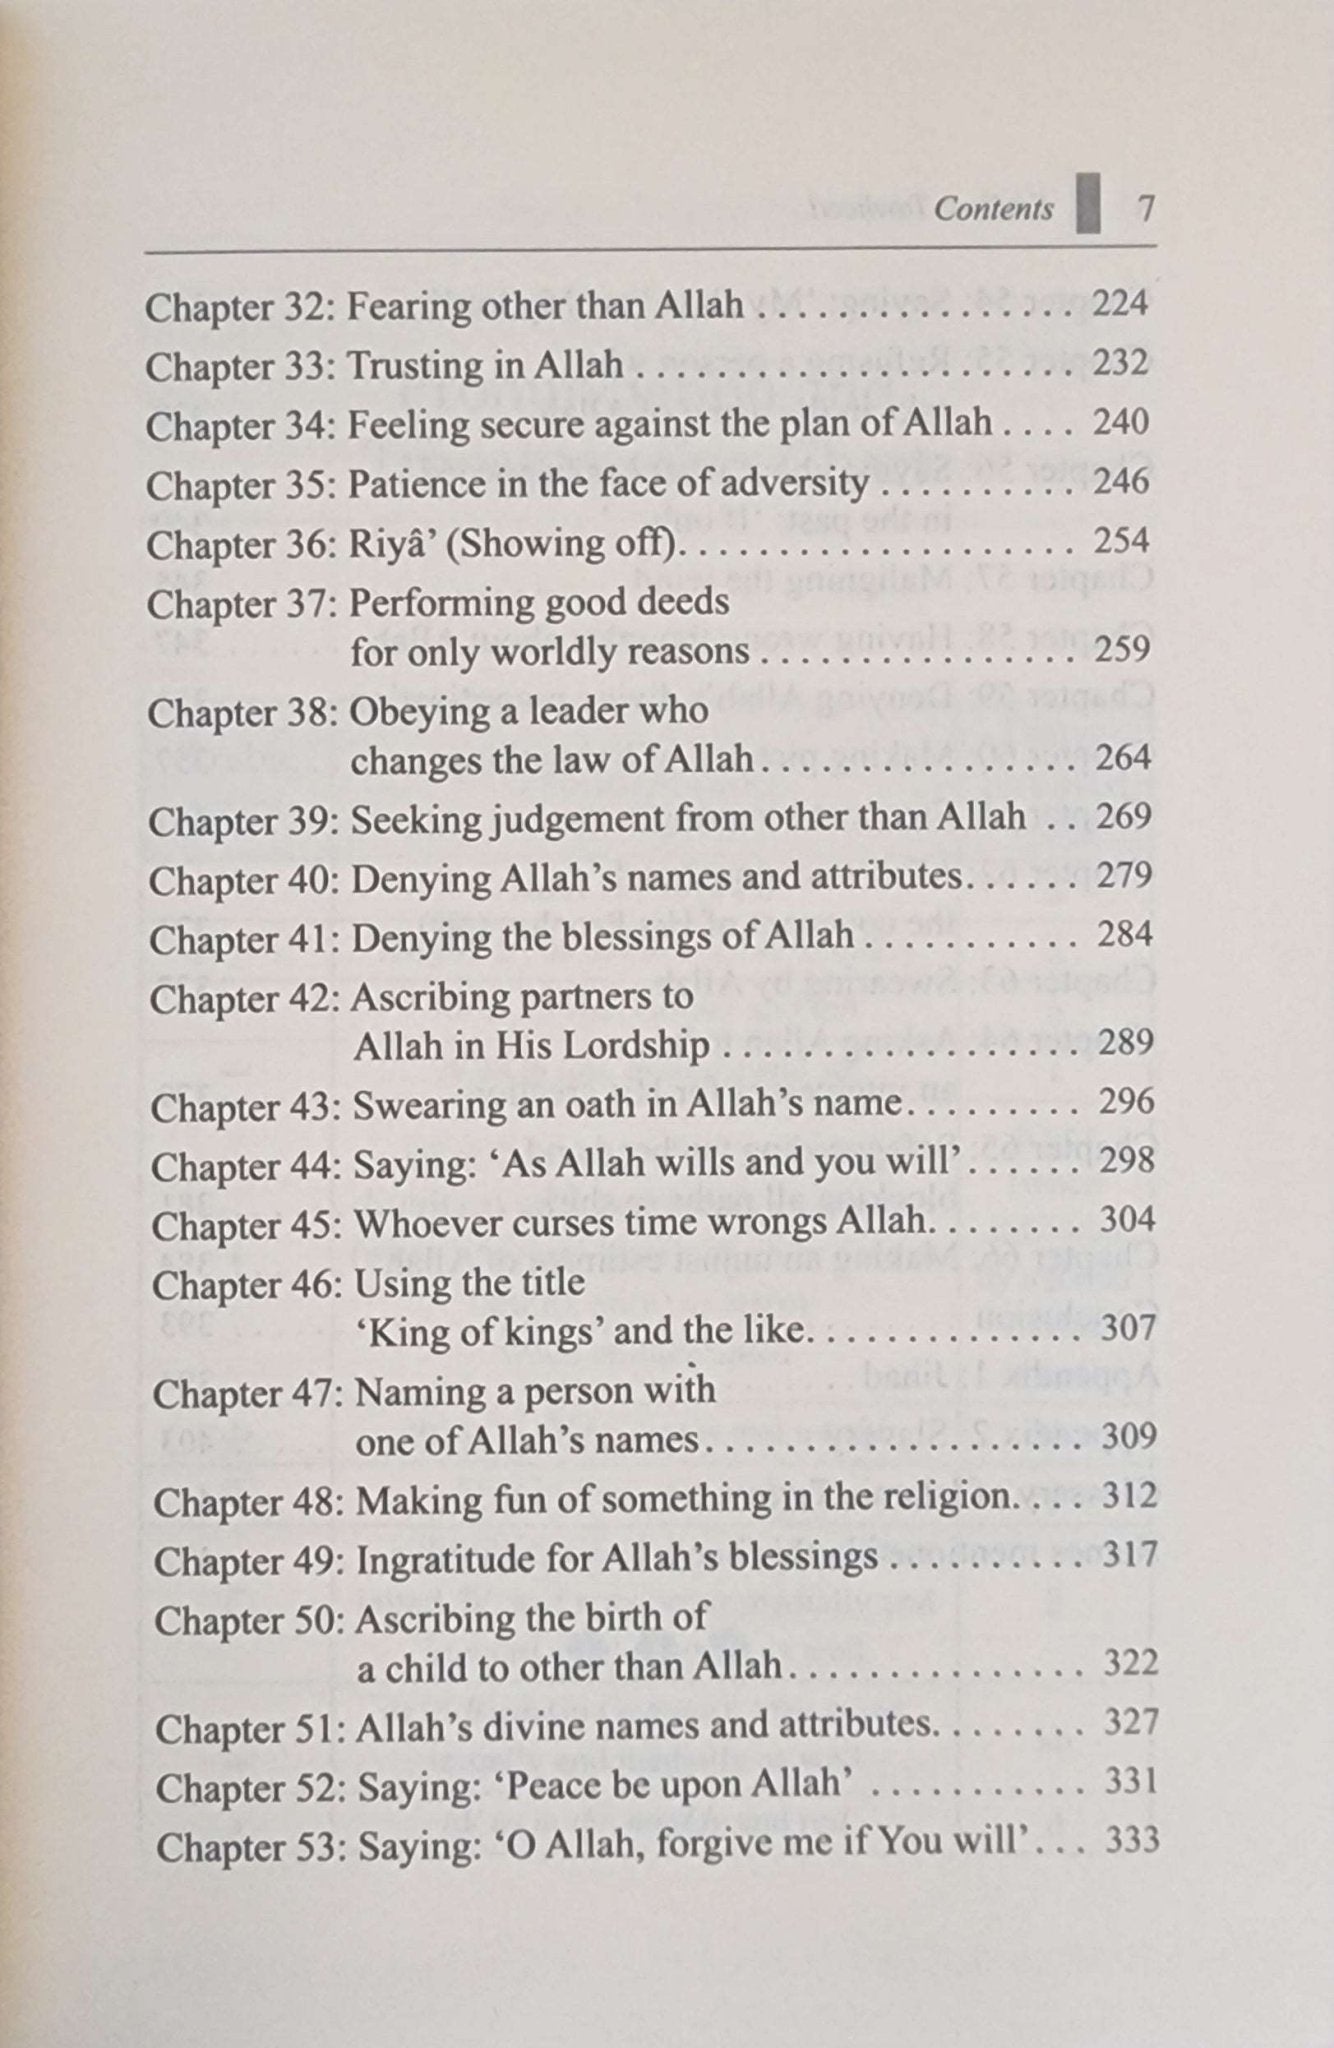 Kitab At-Tawheed Explained | Muhammad Ibn 'Abdul-Wahhab - The Islamic Book Cafe LLC